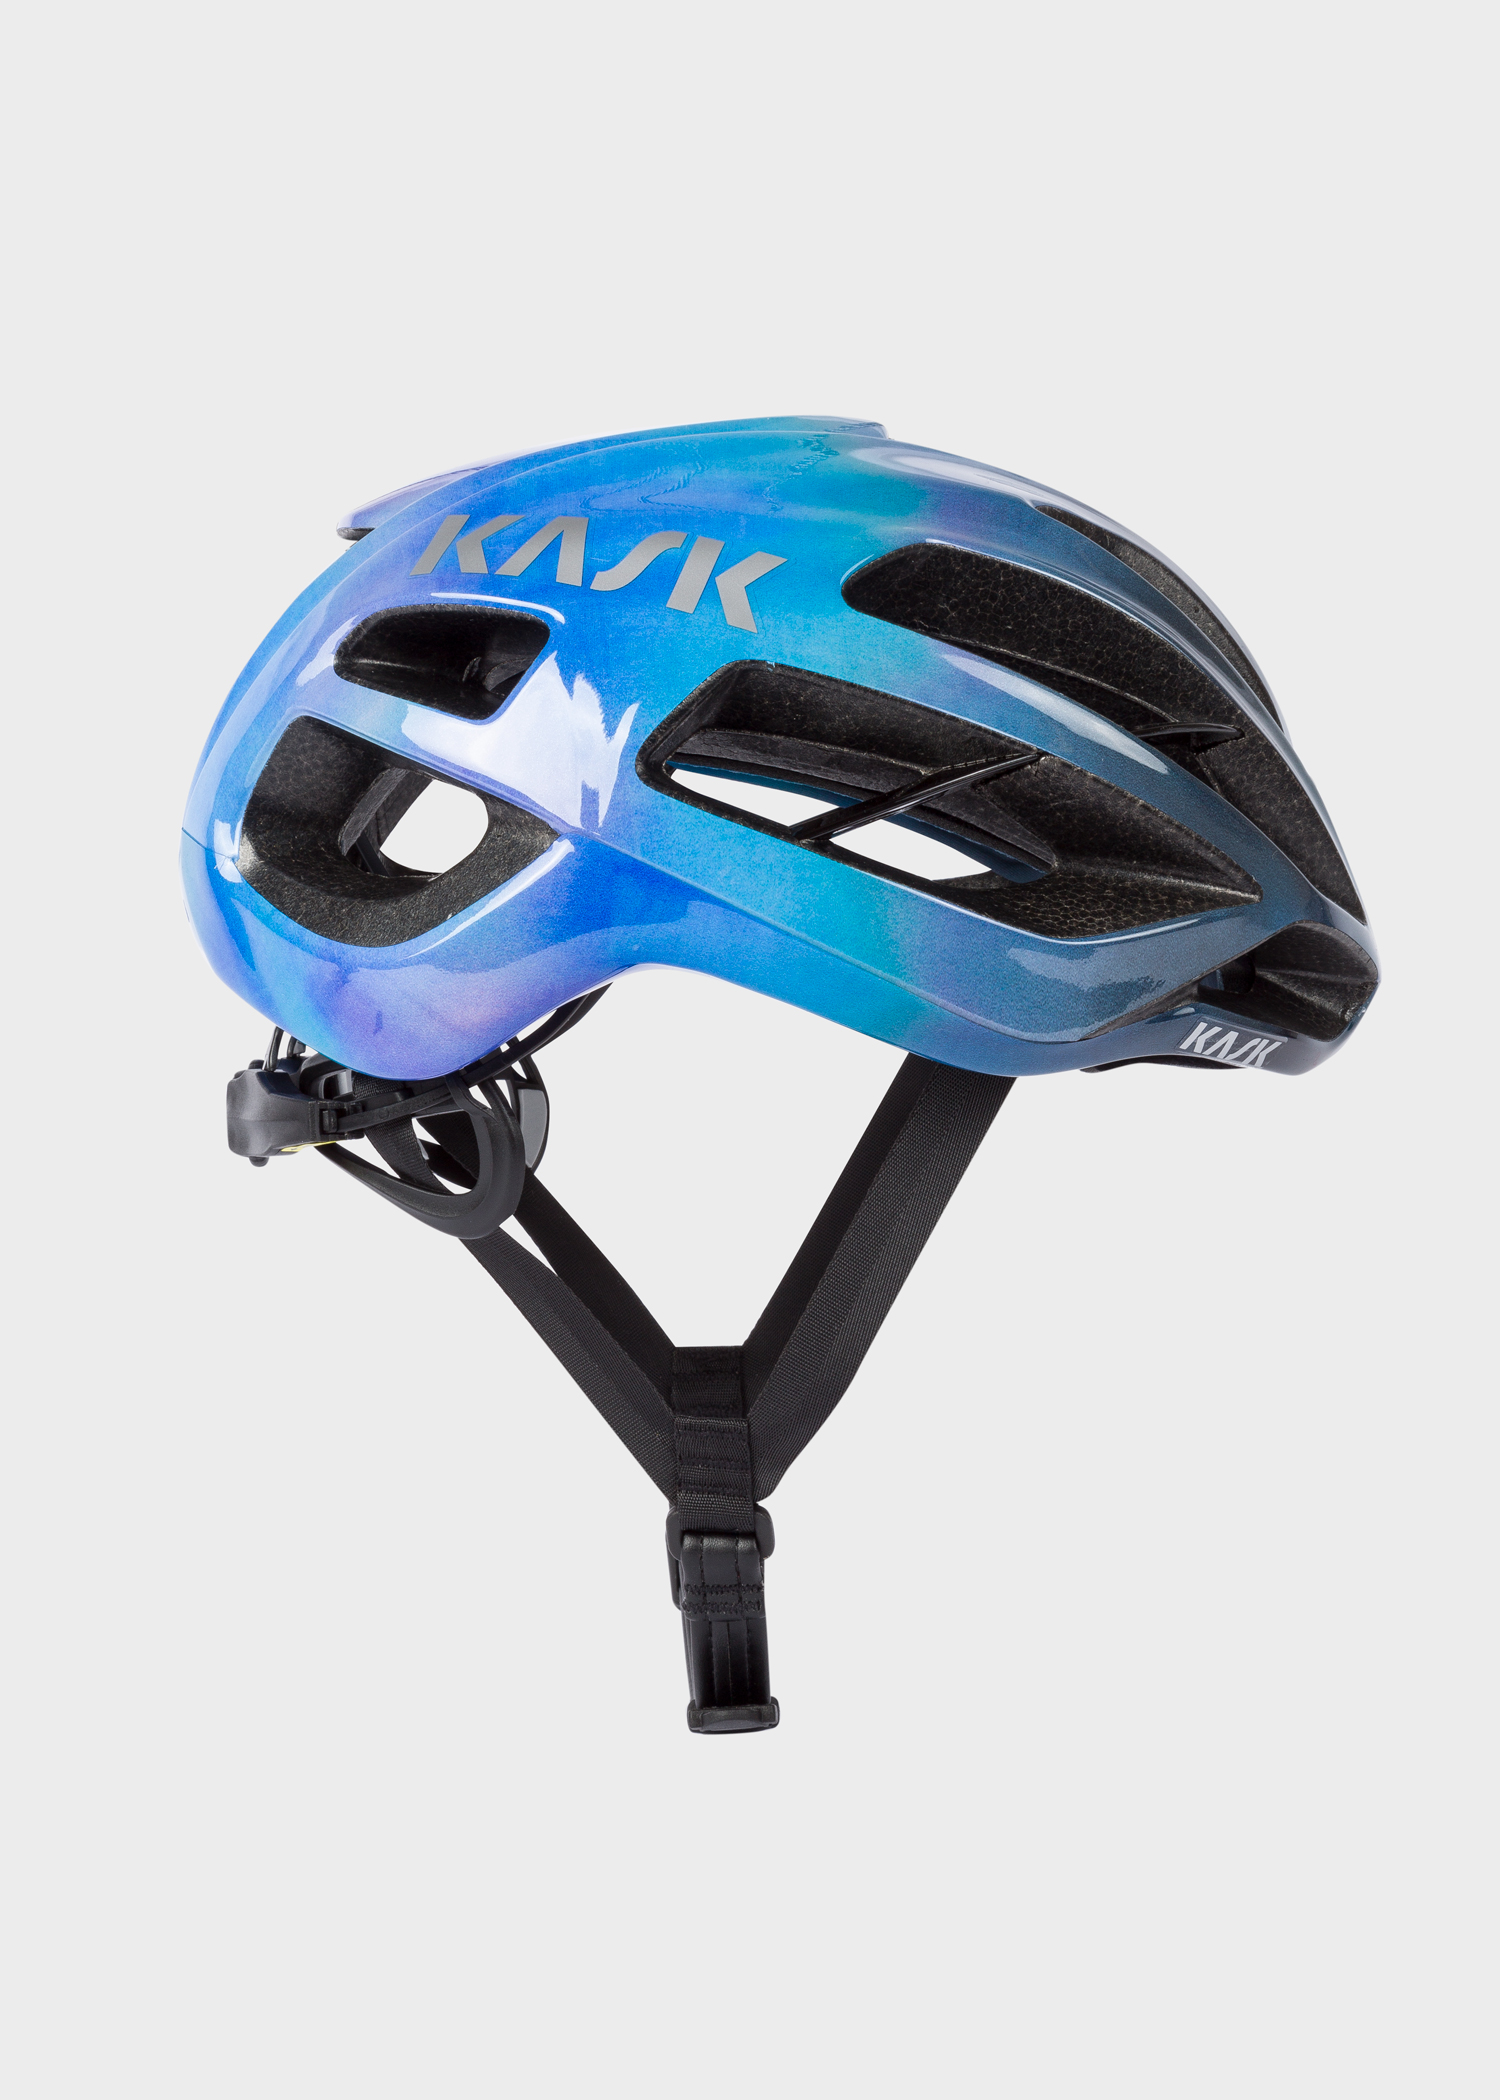 Paul Smith + Kask 'Blue Gradient' Protone Cycling Helmet - Paul Smith